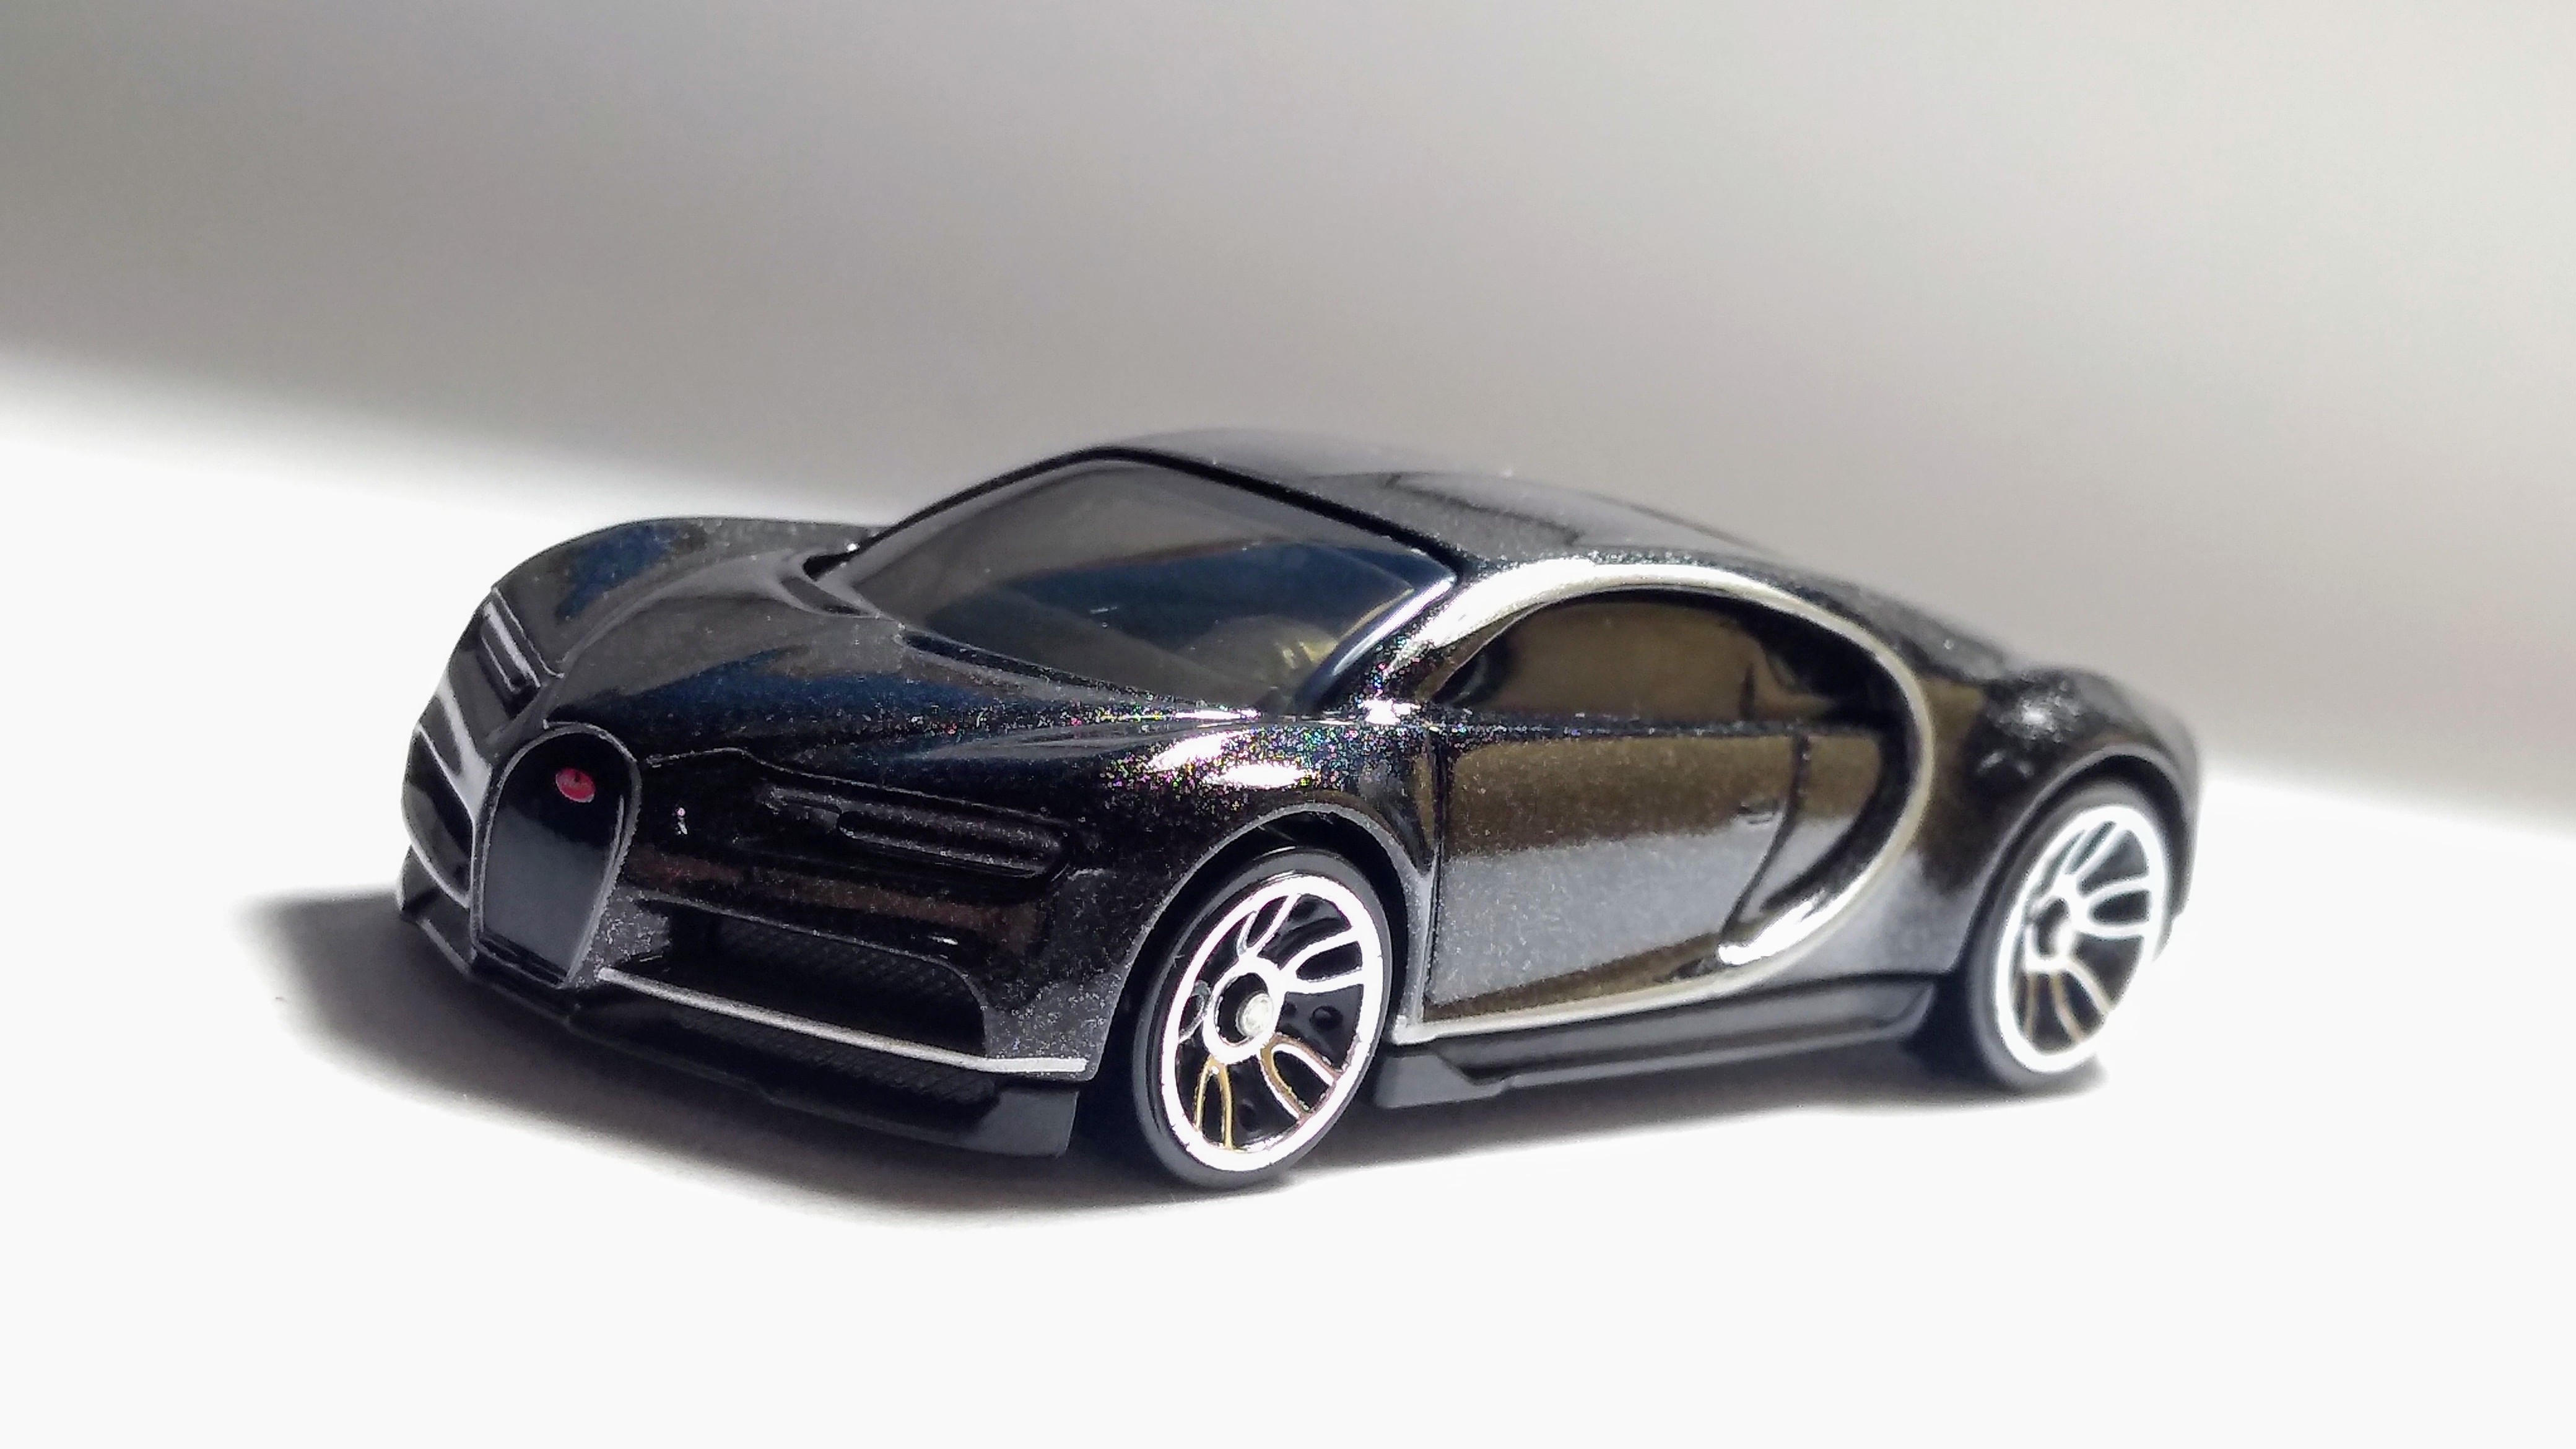 Metalflake Black 16 Bugatti Chiron J5 GHC02 Hot Wheels 2020 Factory Fresh 7/10